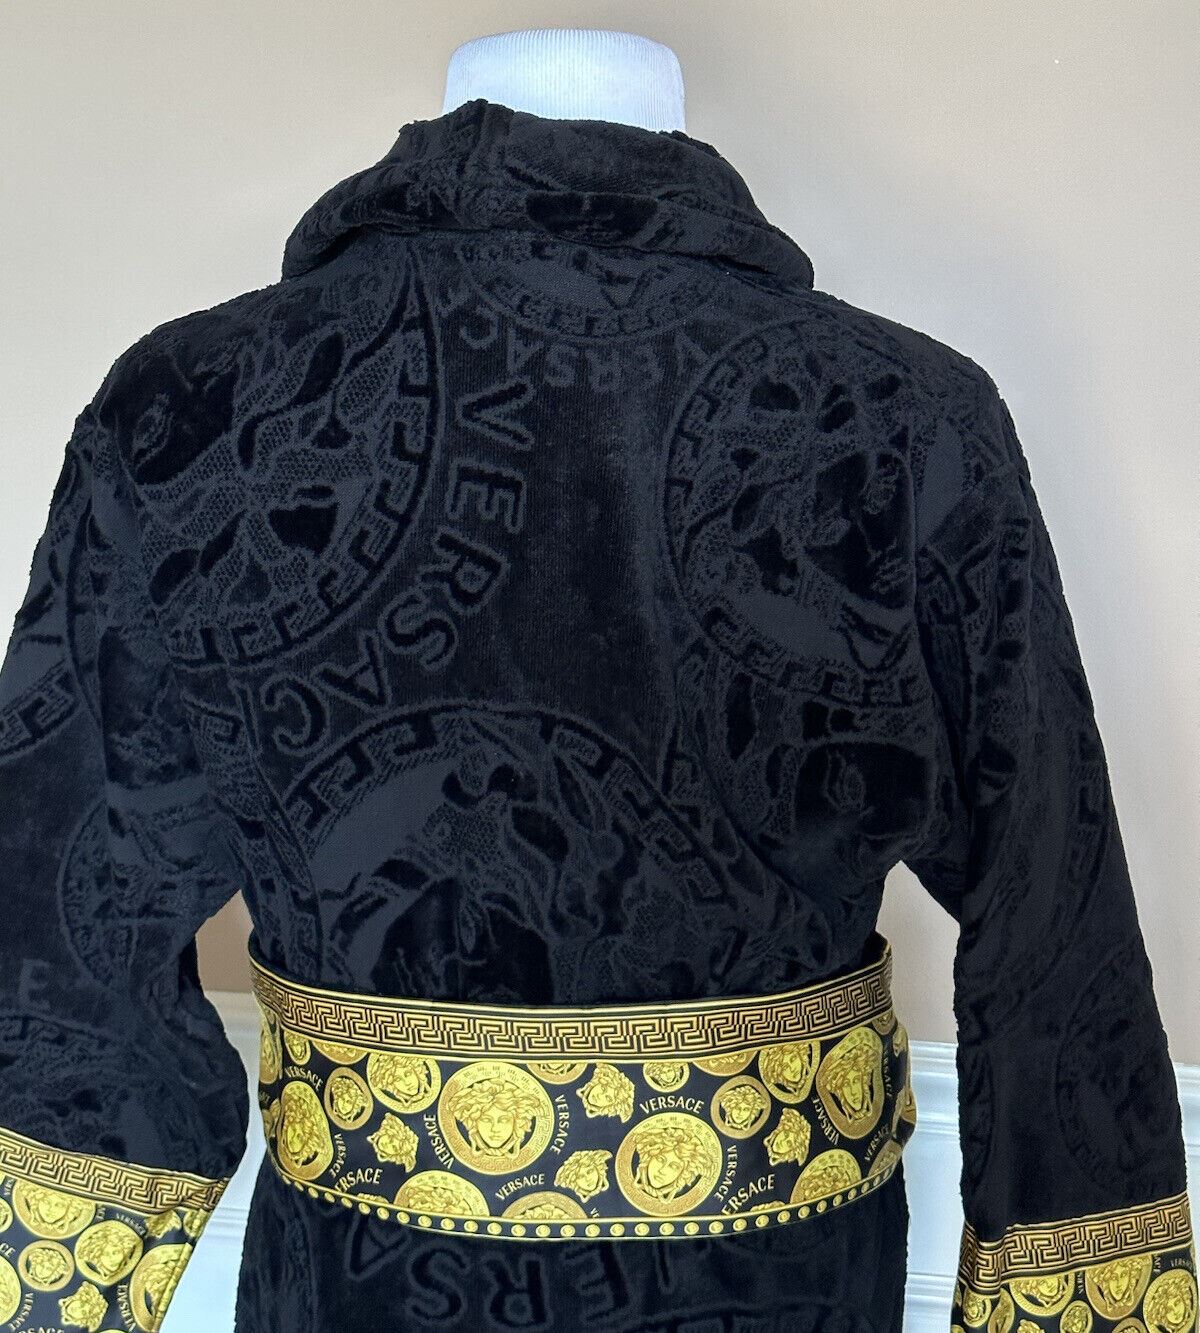 NWT $1500 Versace Medusa Cotton Terry Bath Robe Black XL ZACJ00008